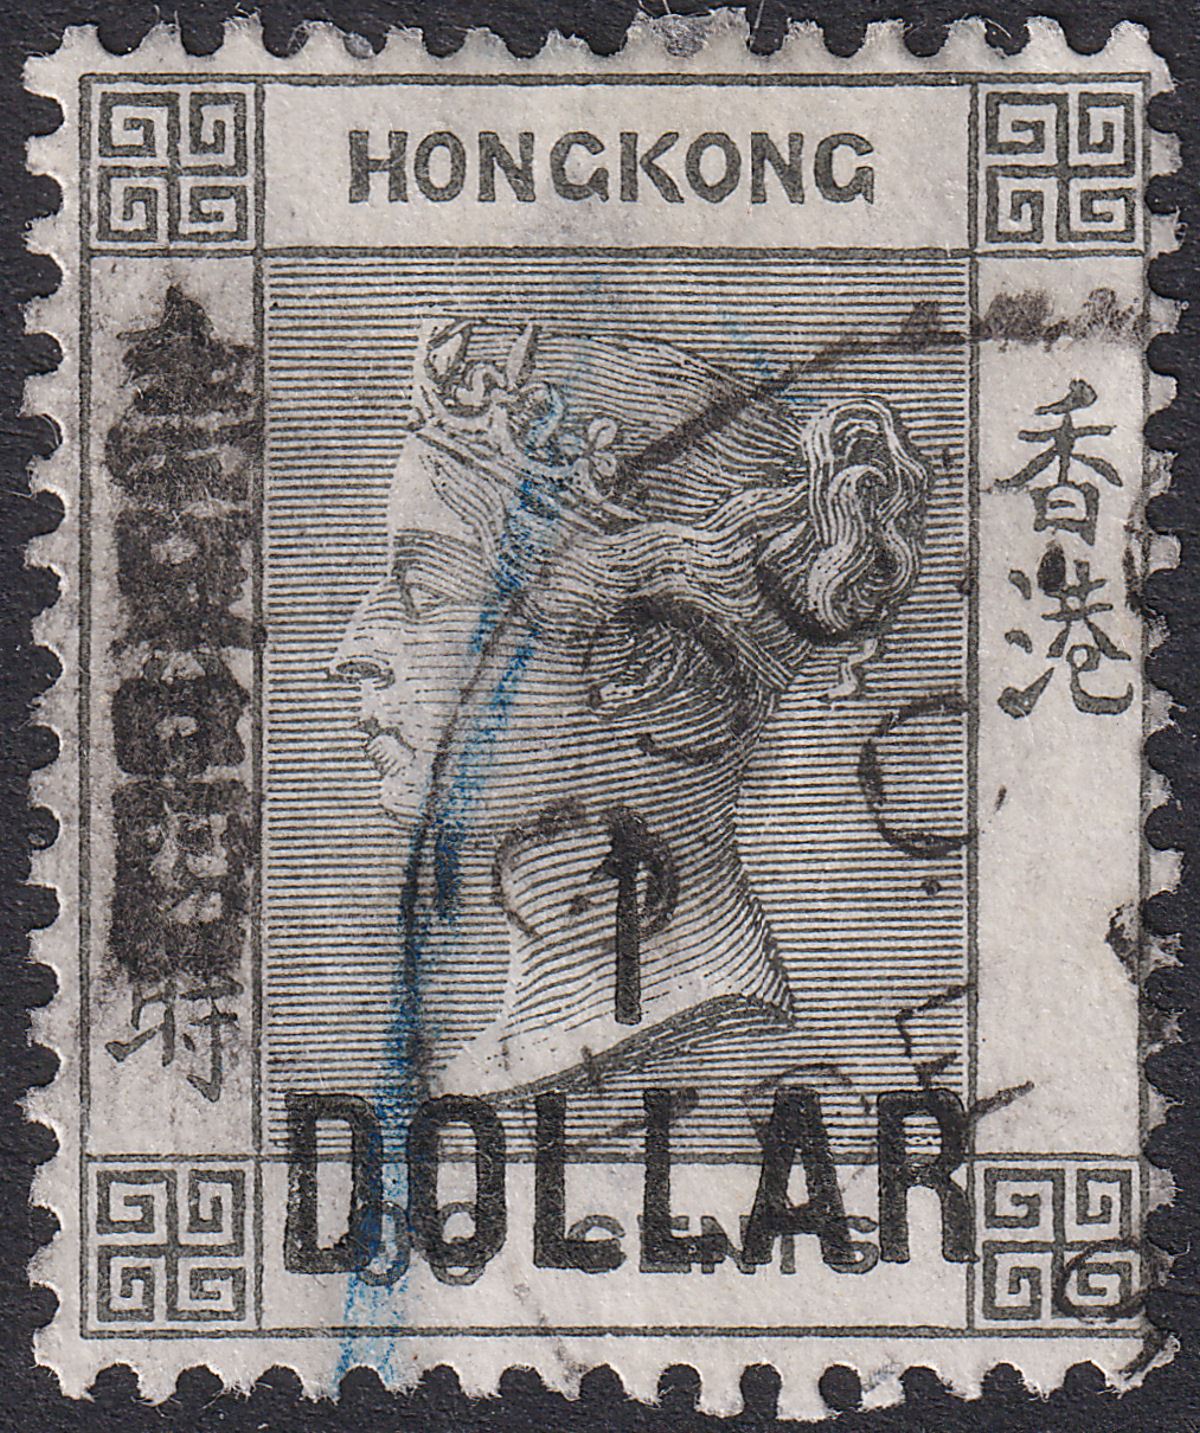 Hong Kong 1898 QV $1 Surcharge on 96c Used FOOCHOW China Postmark SG Z353 c£150